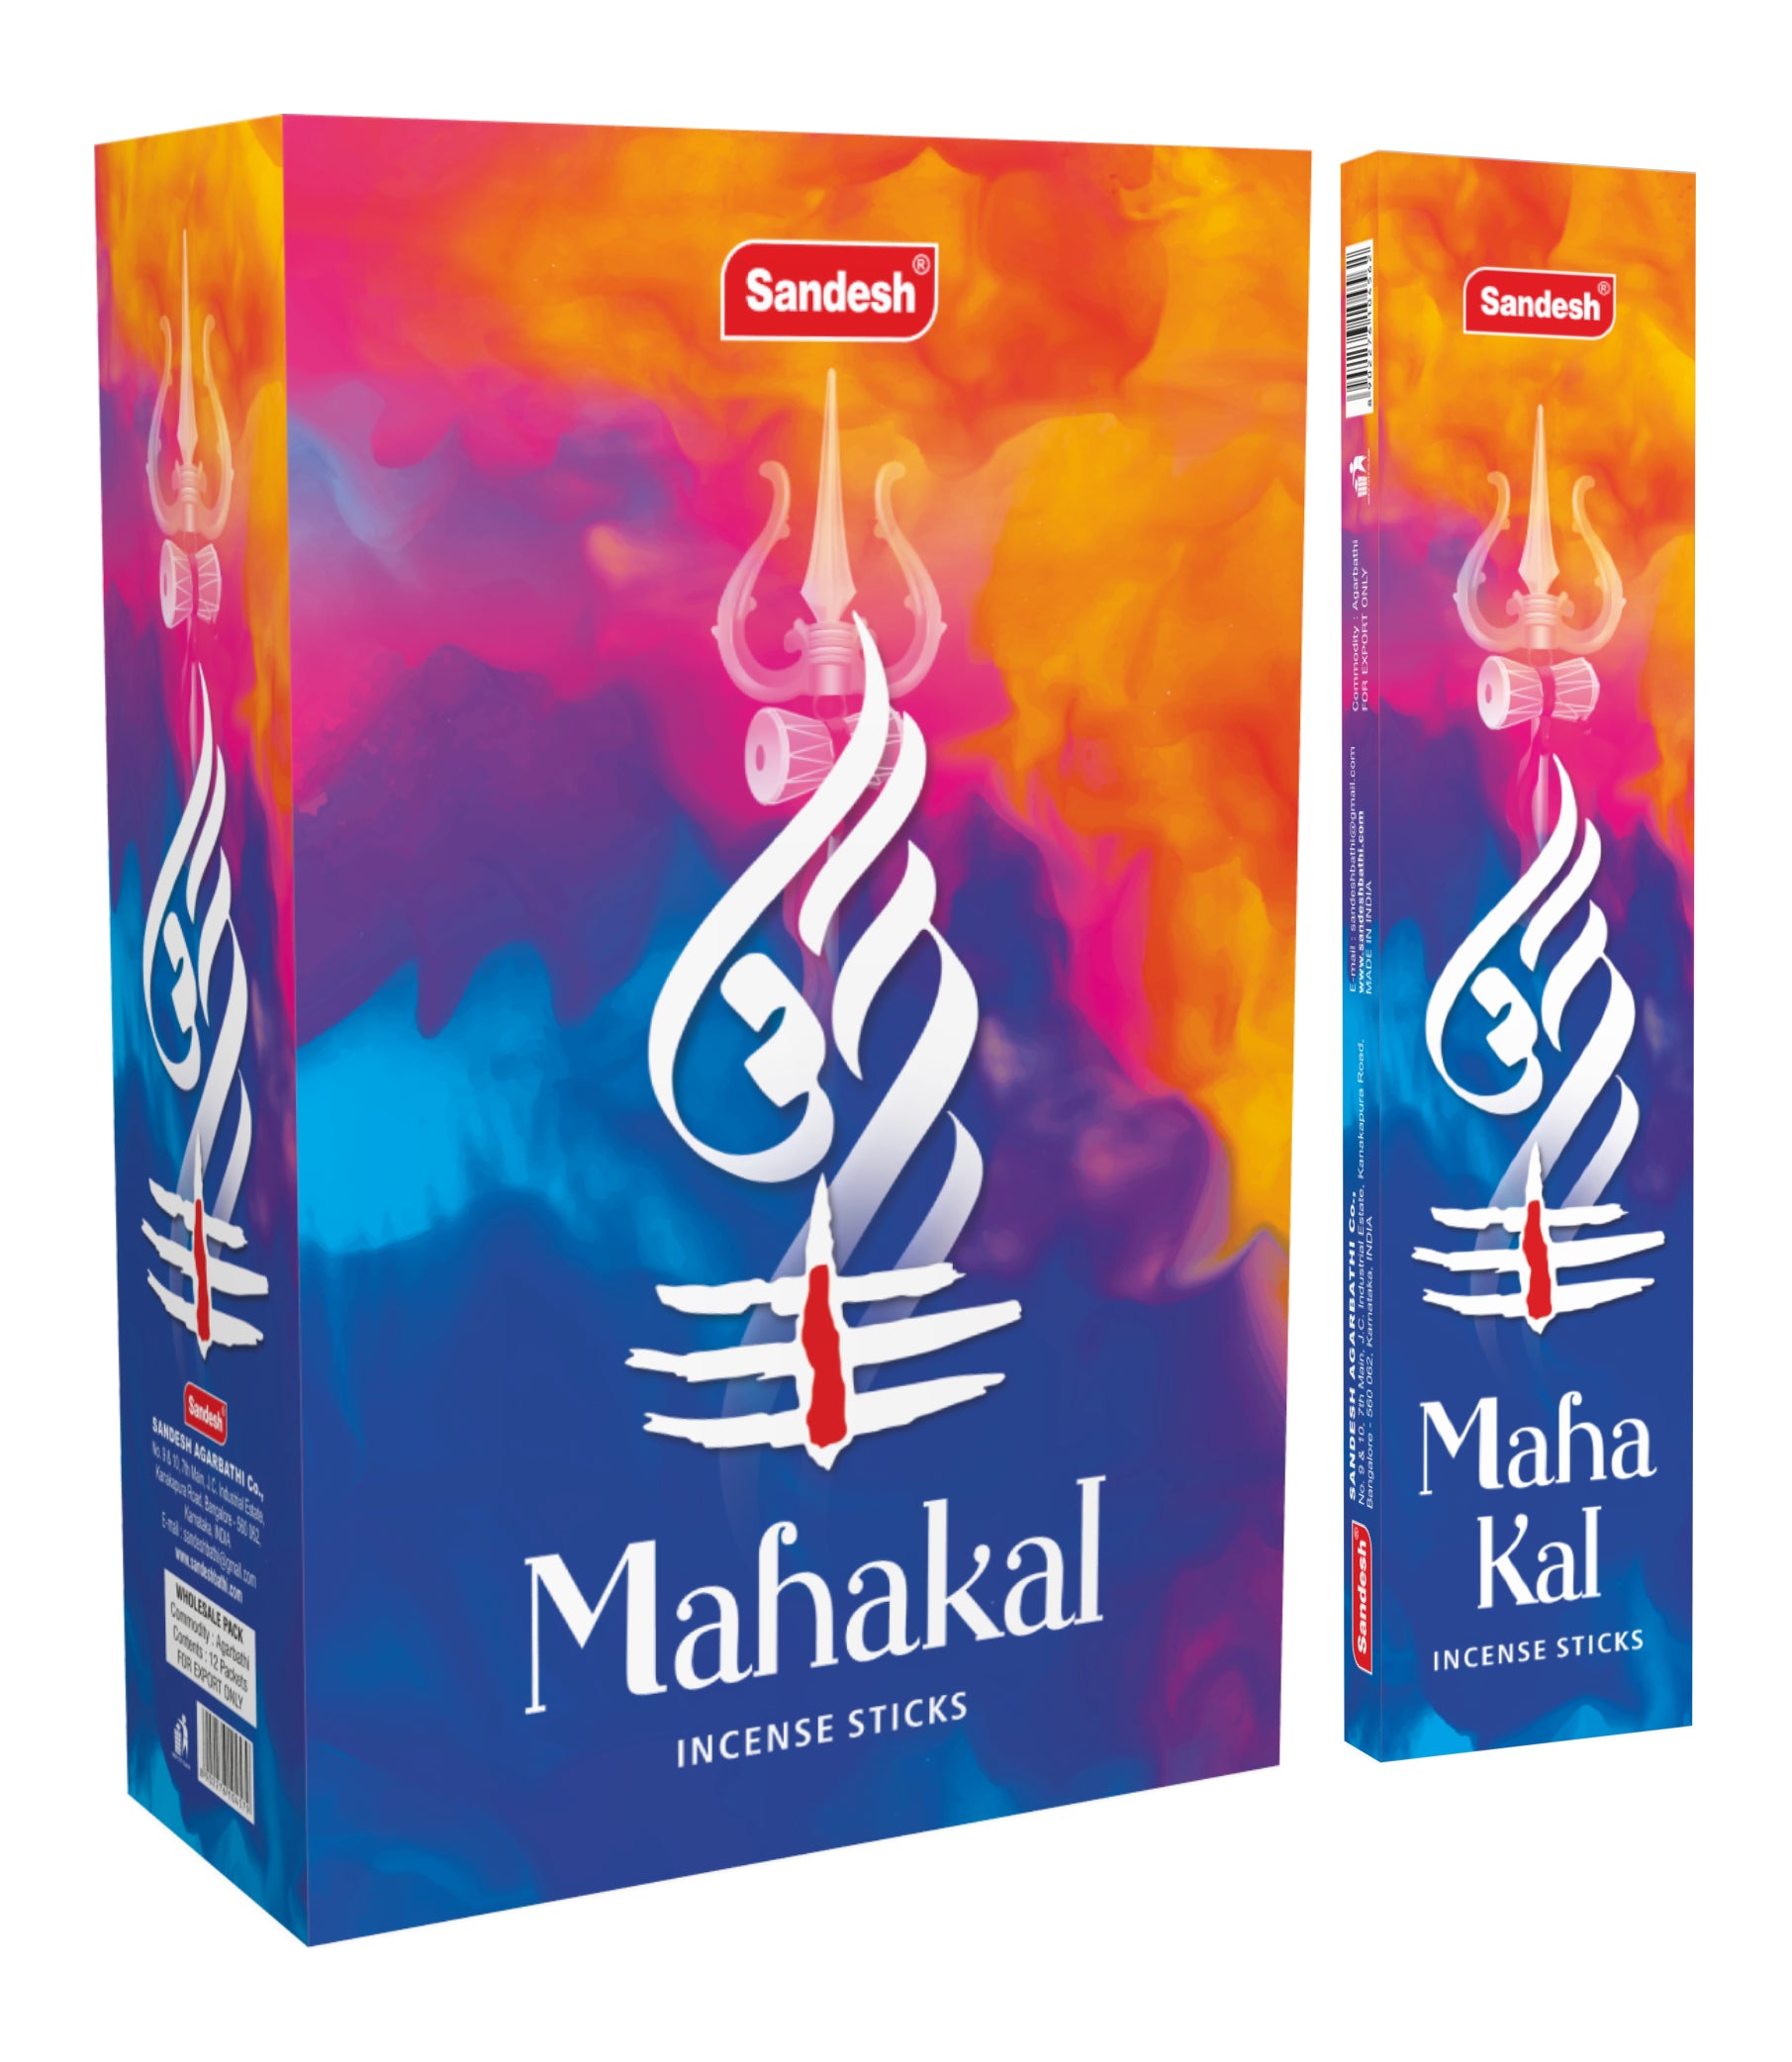 Mahakal Premium Incense sticks by Sandesh Agarbathi Co